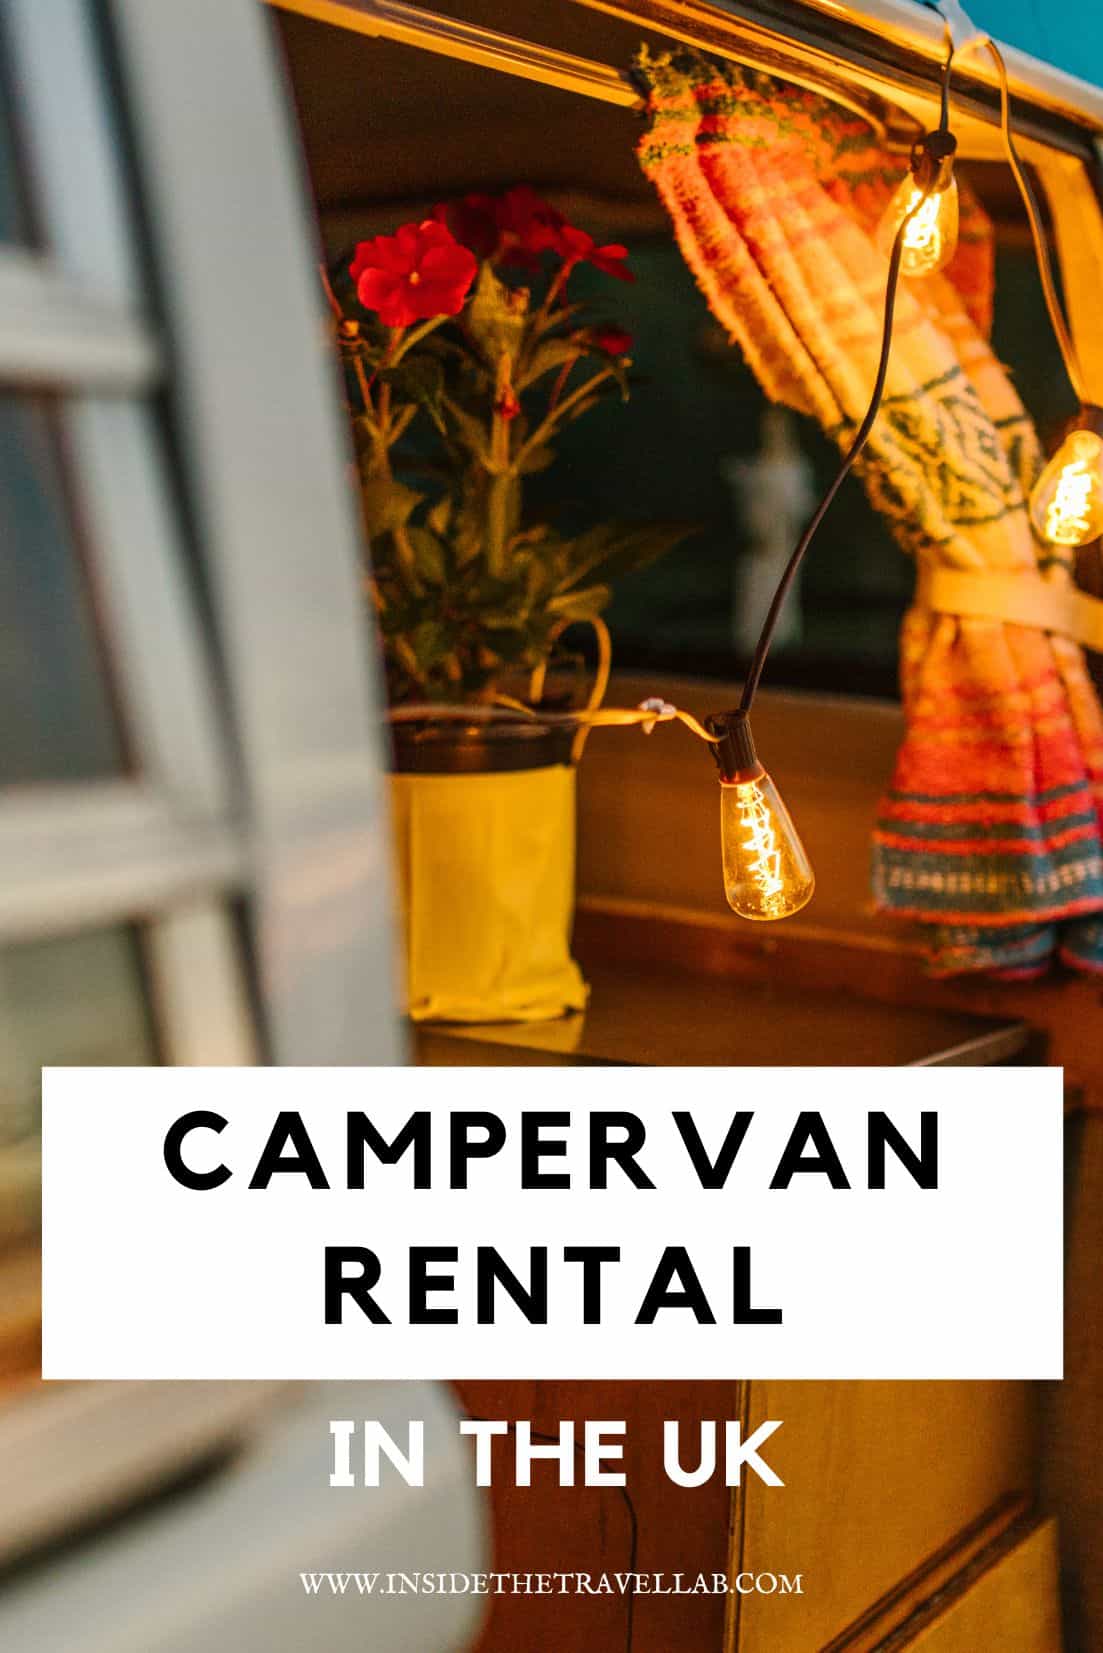 Campervan rental in the UK cover image